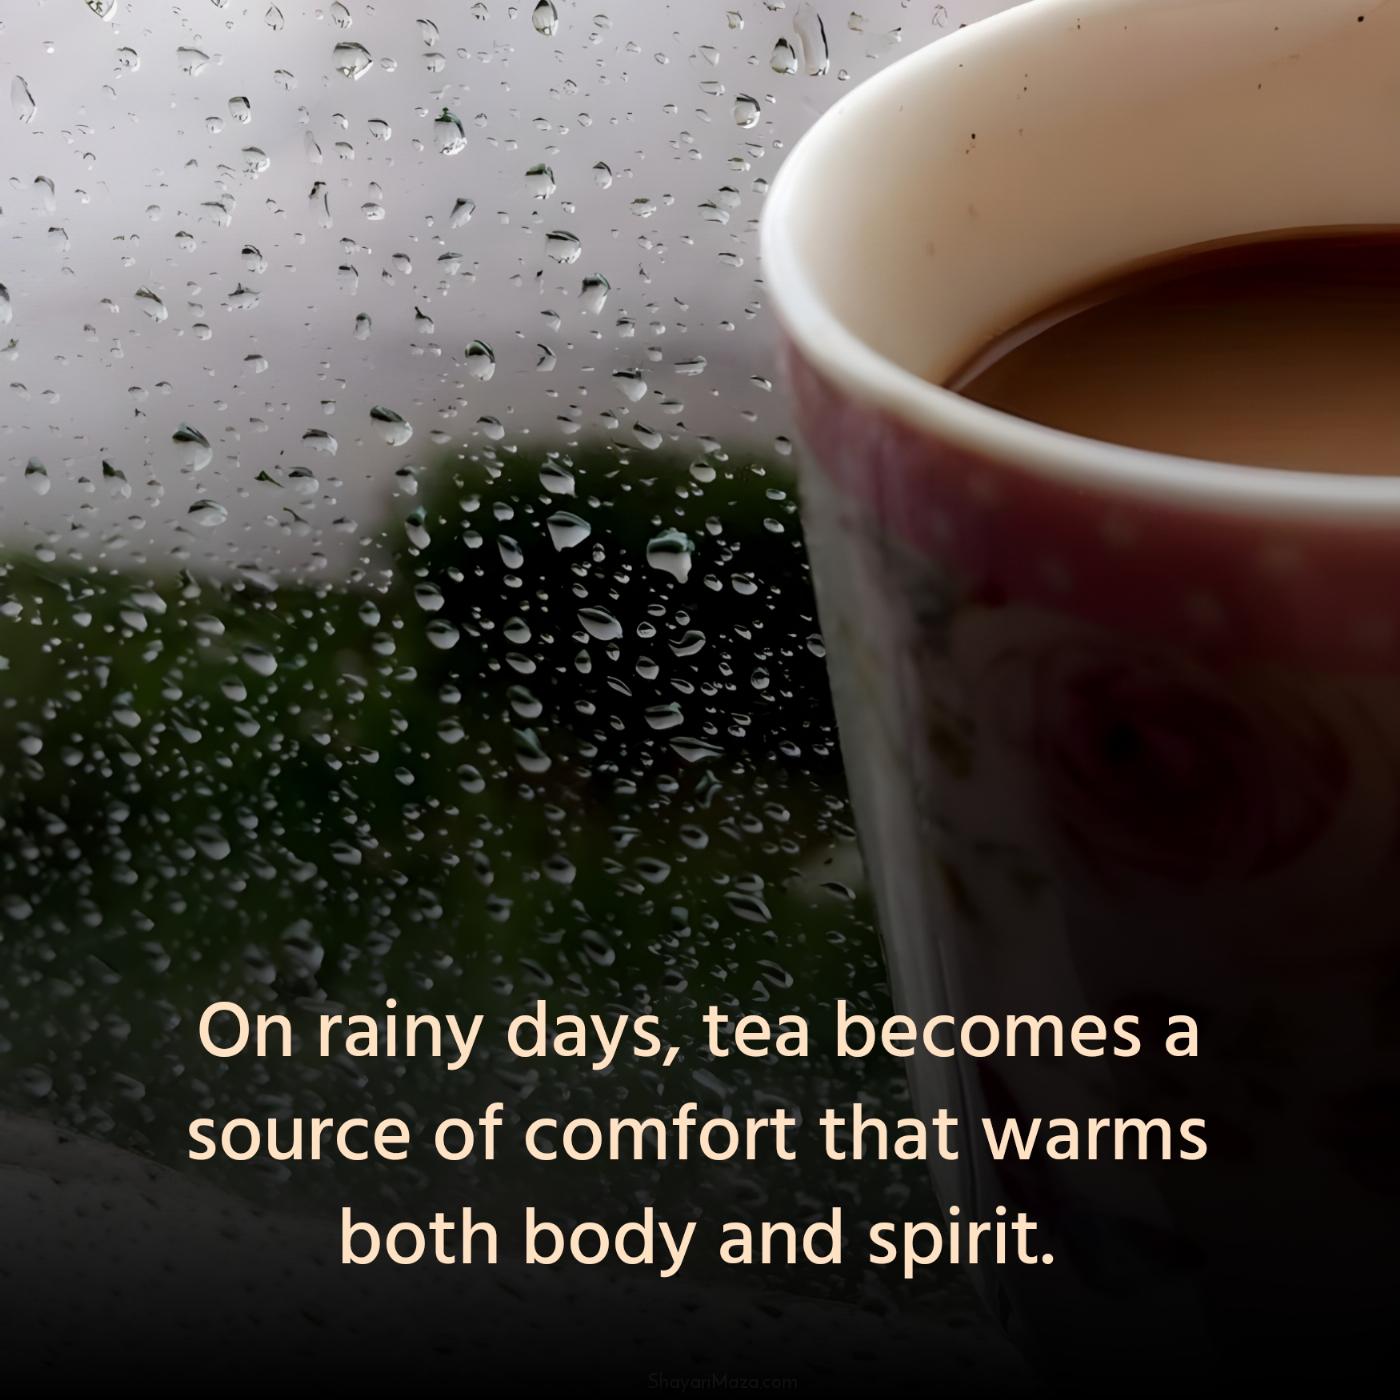 On rainy days tea becomes a source of comfort